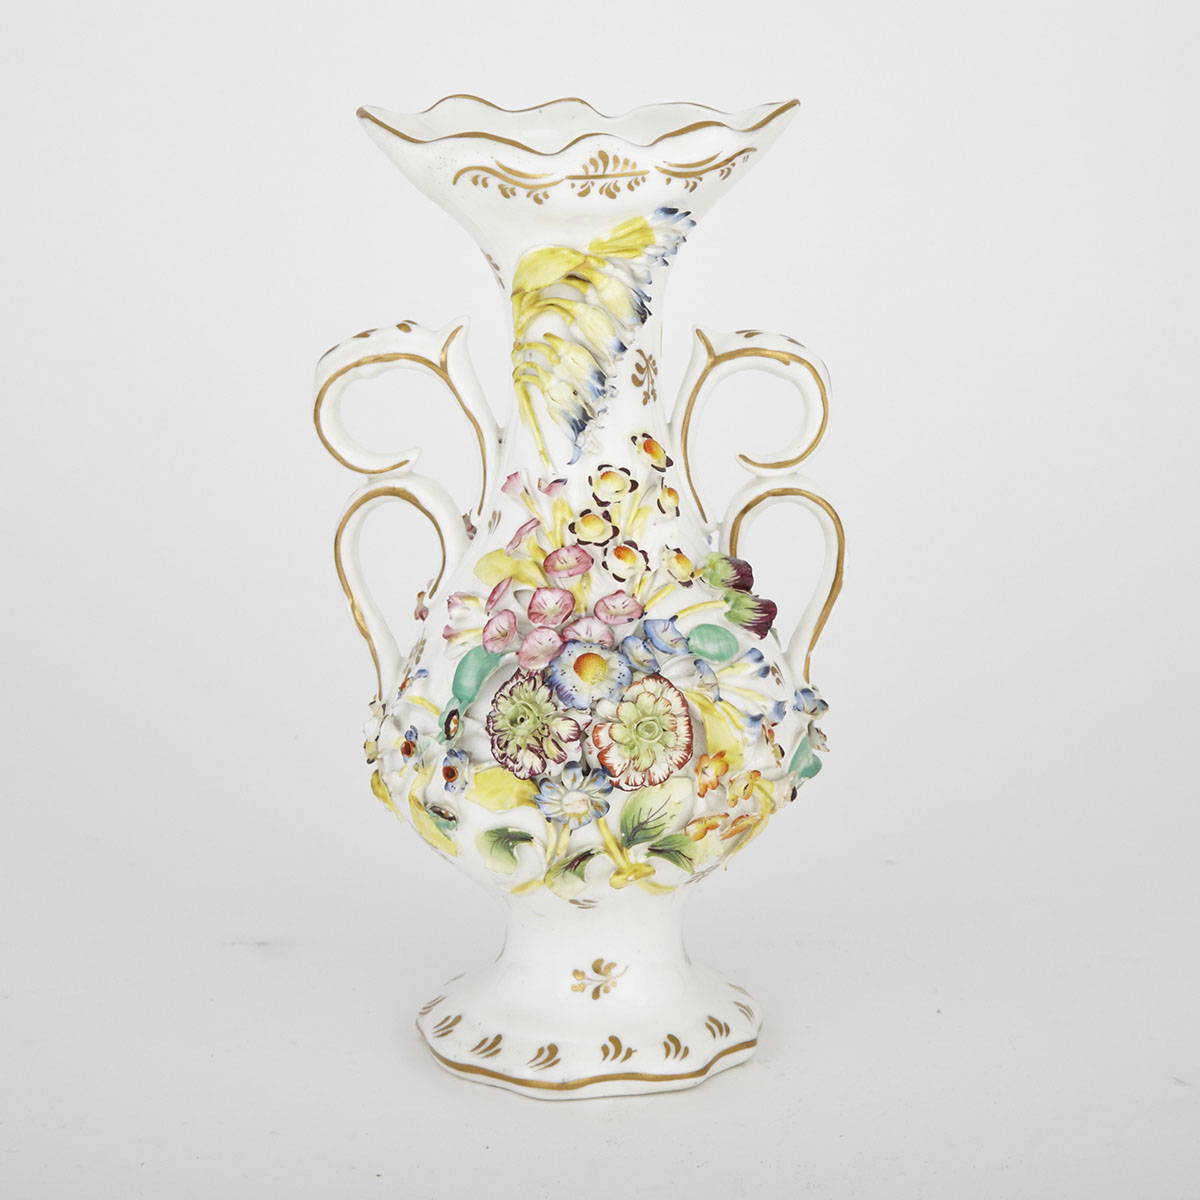 Coalbrookdale-Type Flower Encrusted Two-Handled Vase, mid-19th century